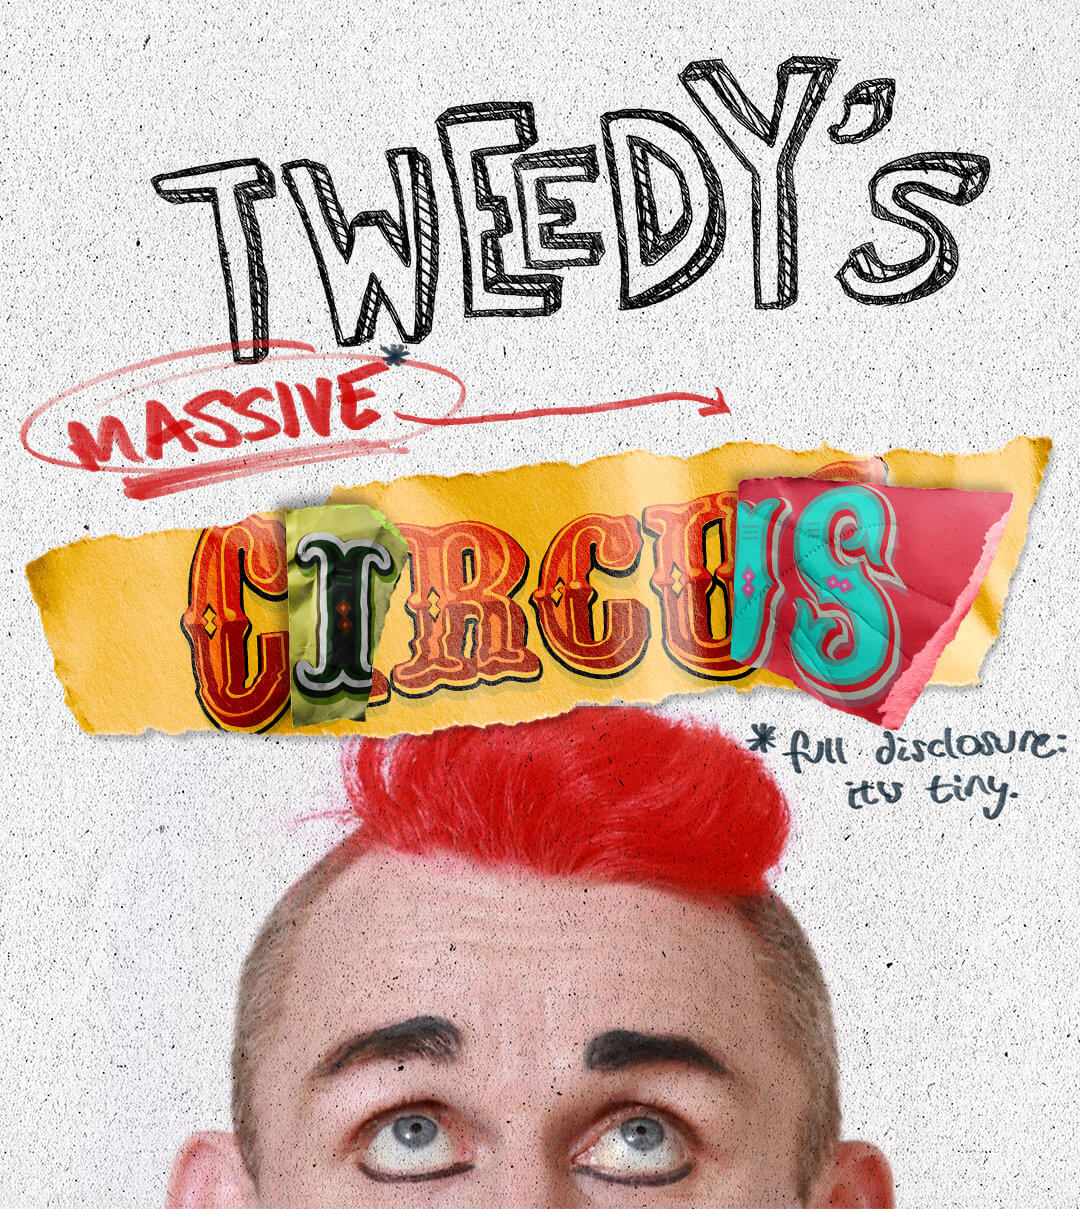 Tweedy’s Massive Circus Show